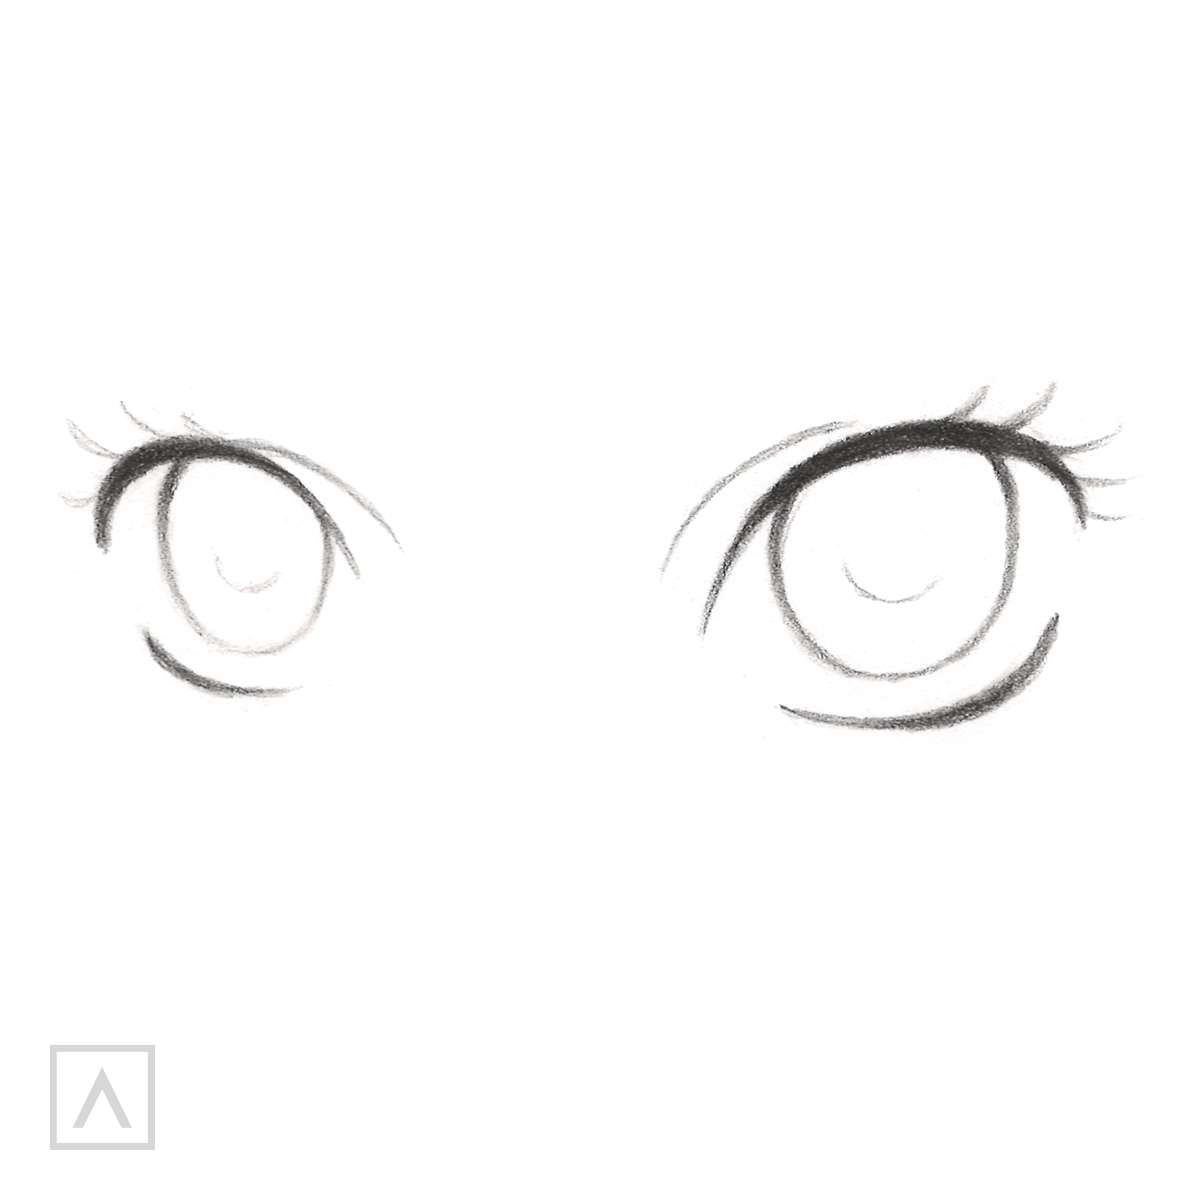 Anime Fan Art: Anime eyes | Anime eye drawing, Anime drawings, Eyes artwork